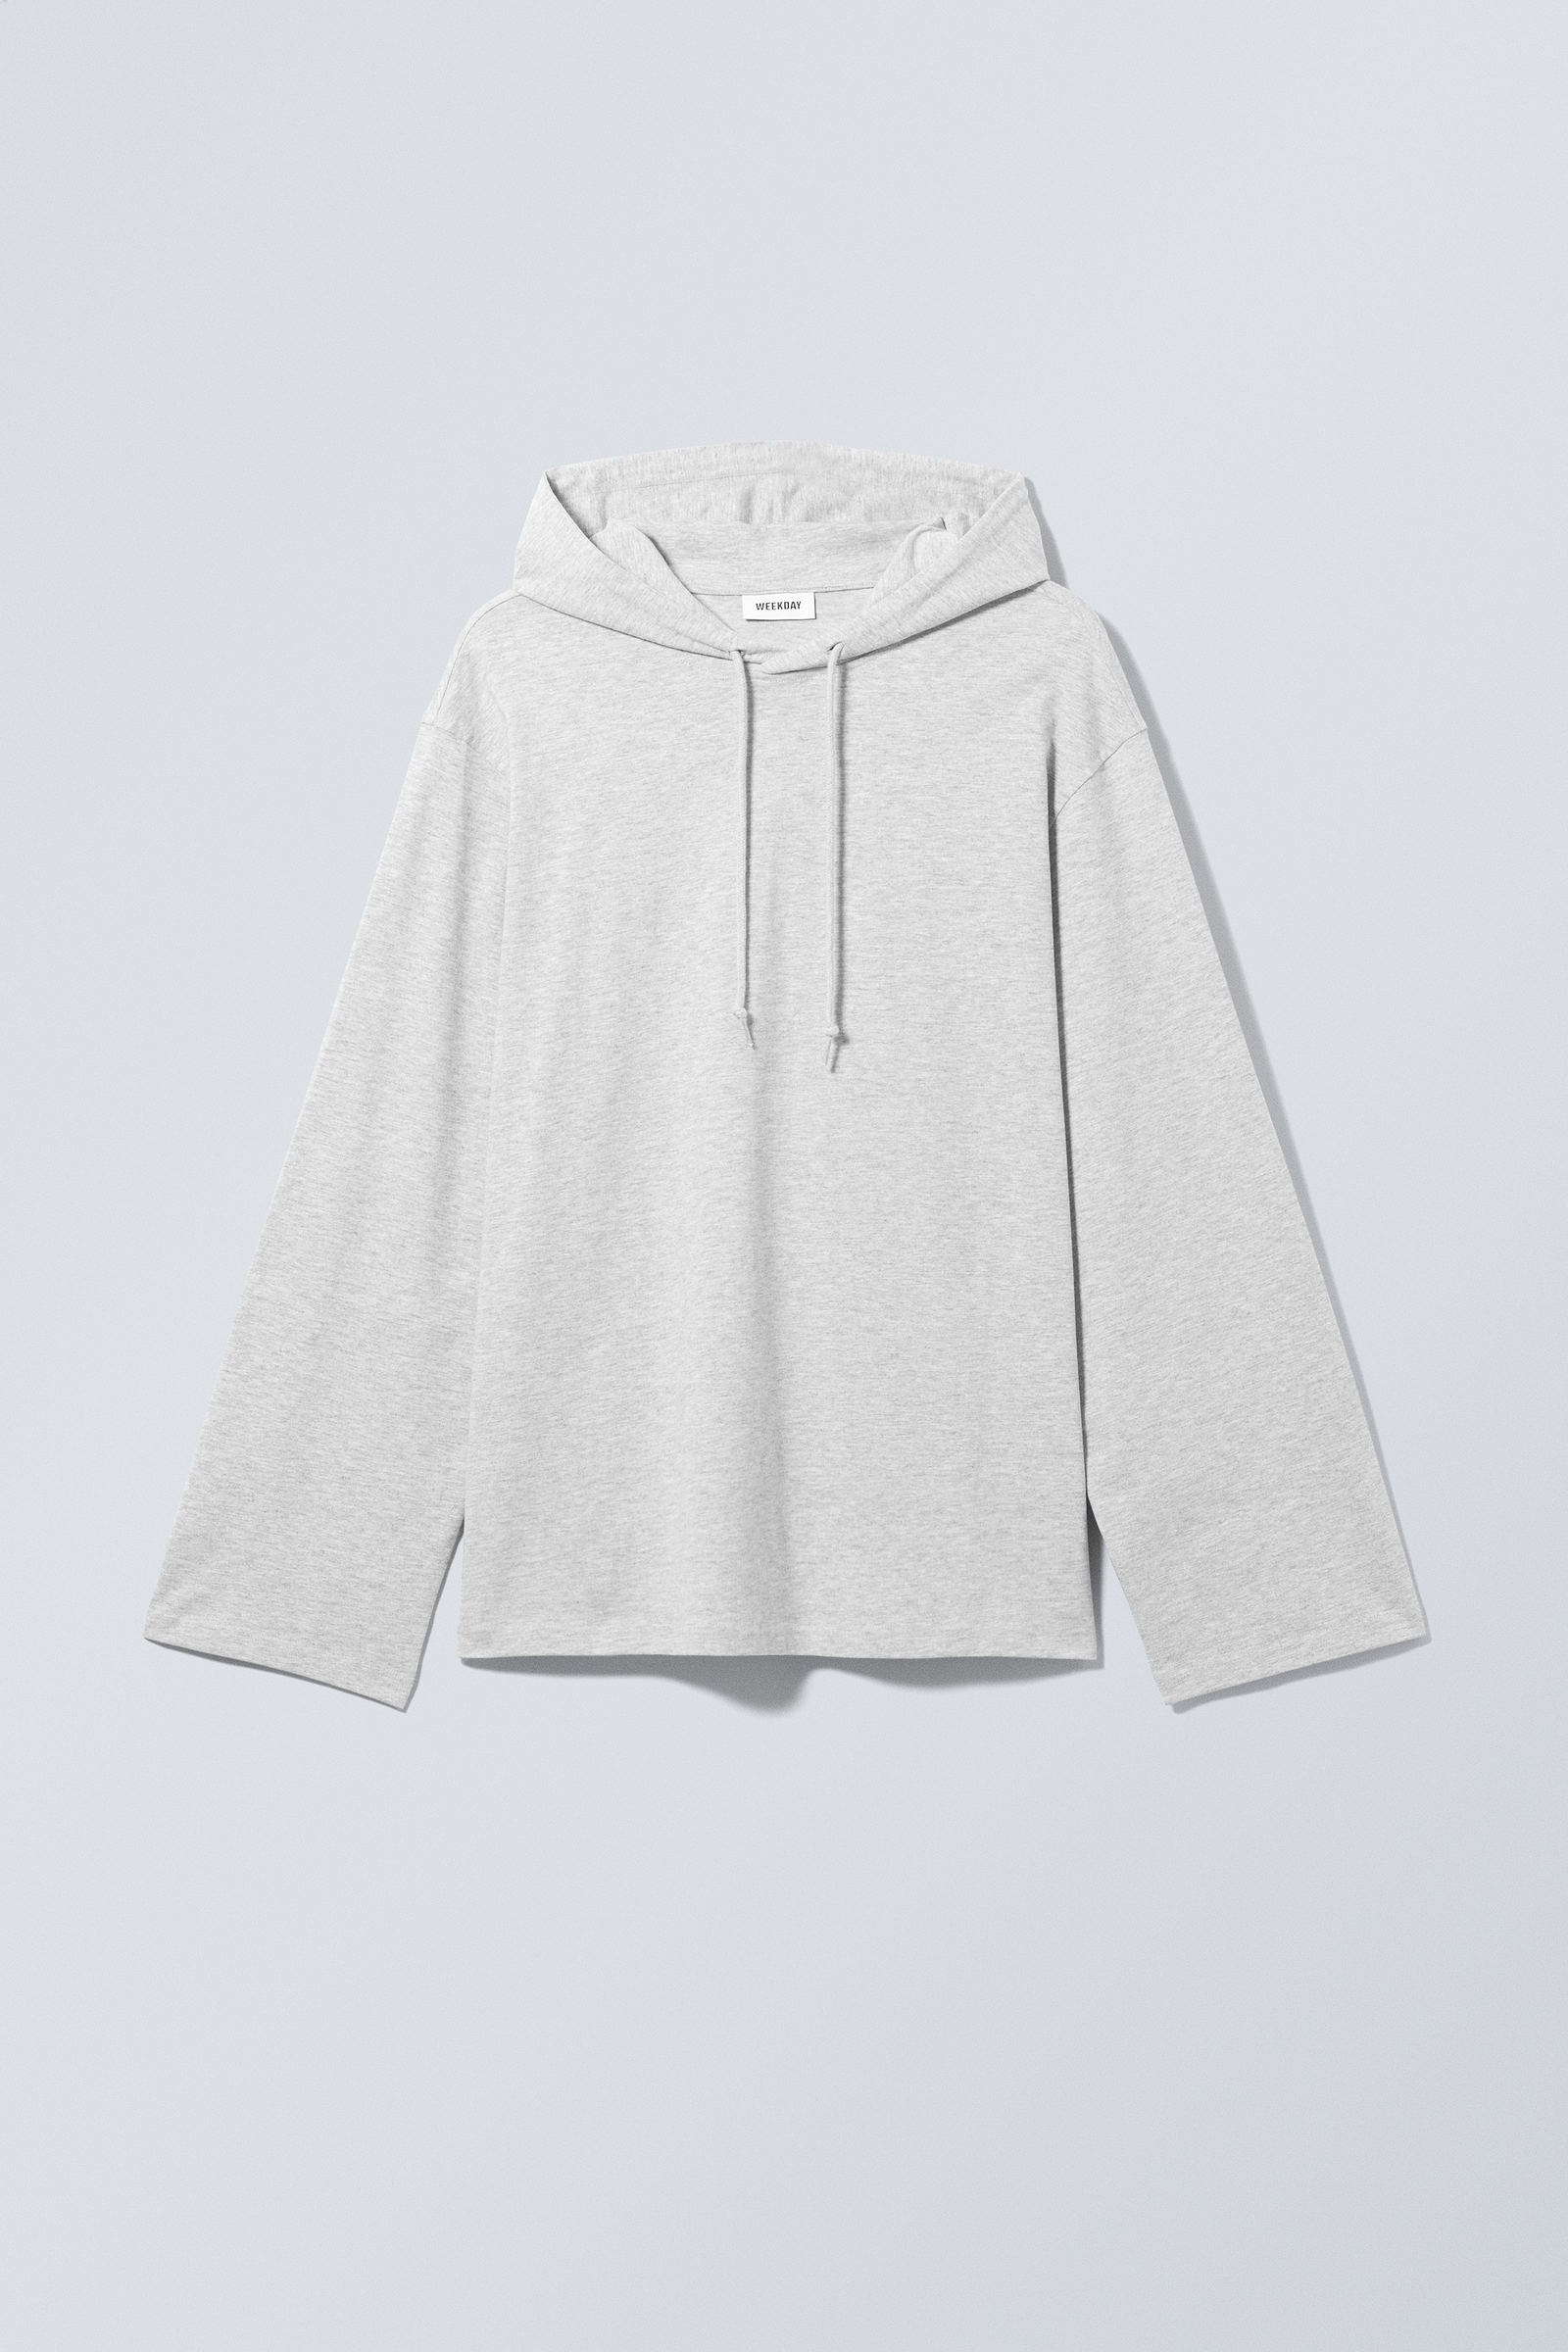 Light Grey - Oversized Hooded Long Sleeve - 0